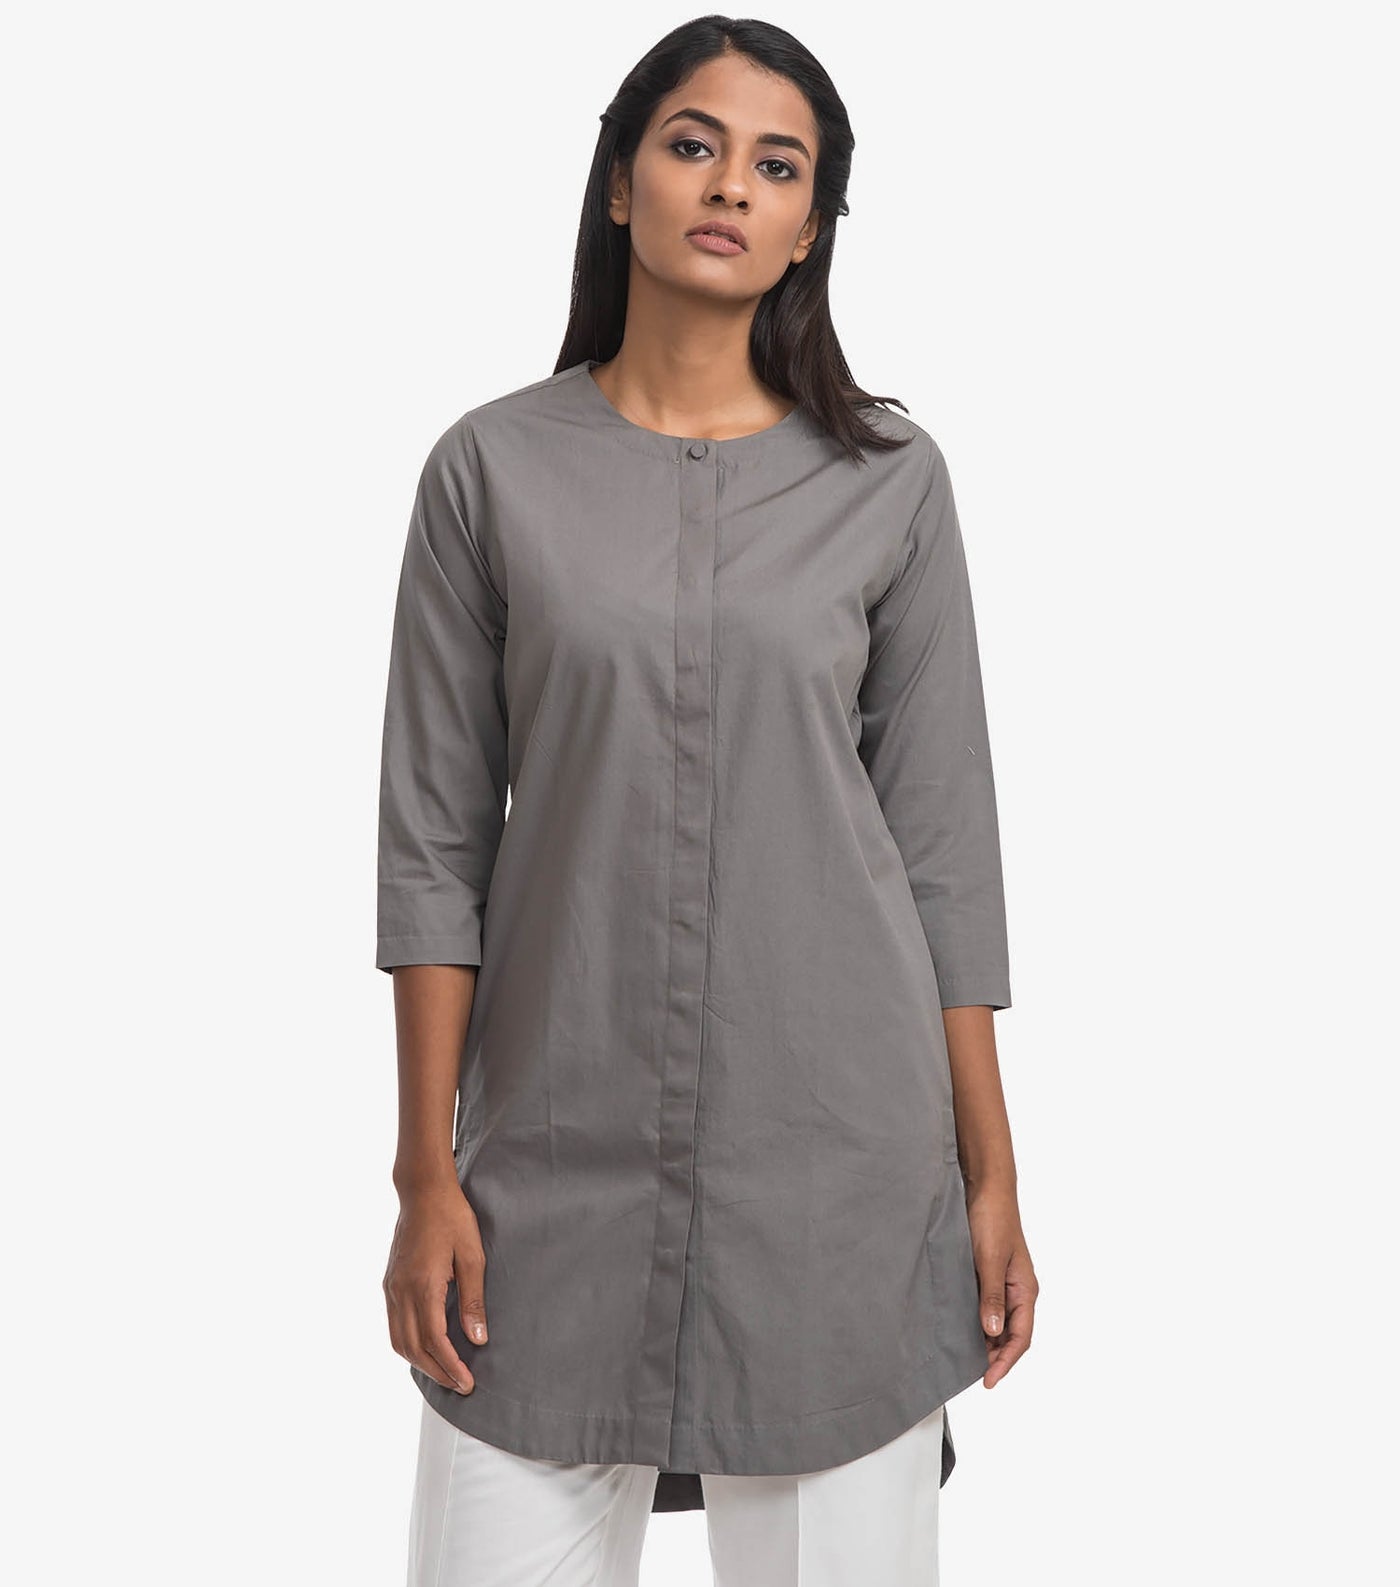 Grey solid cotton poplin shirt